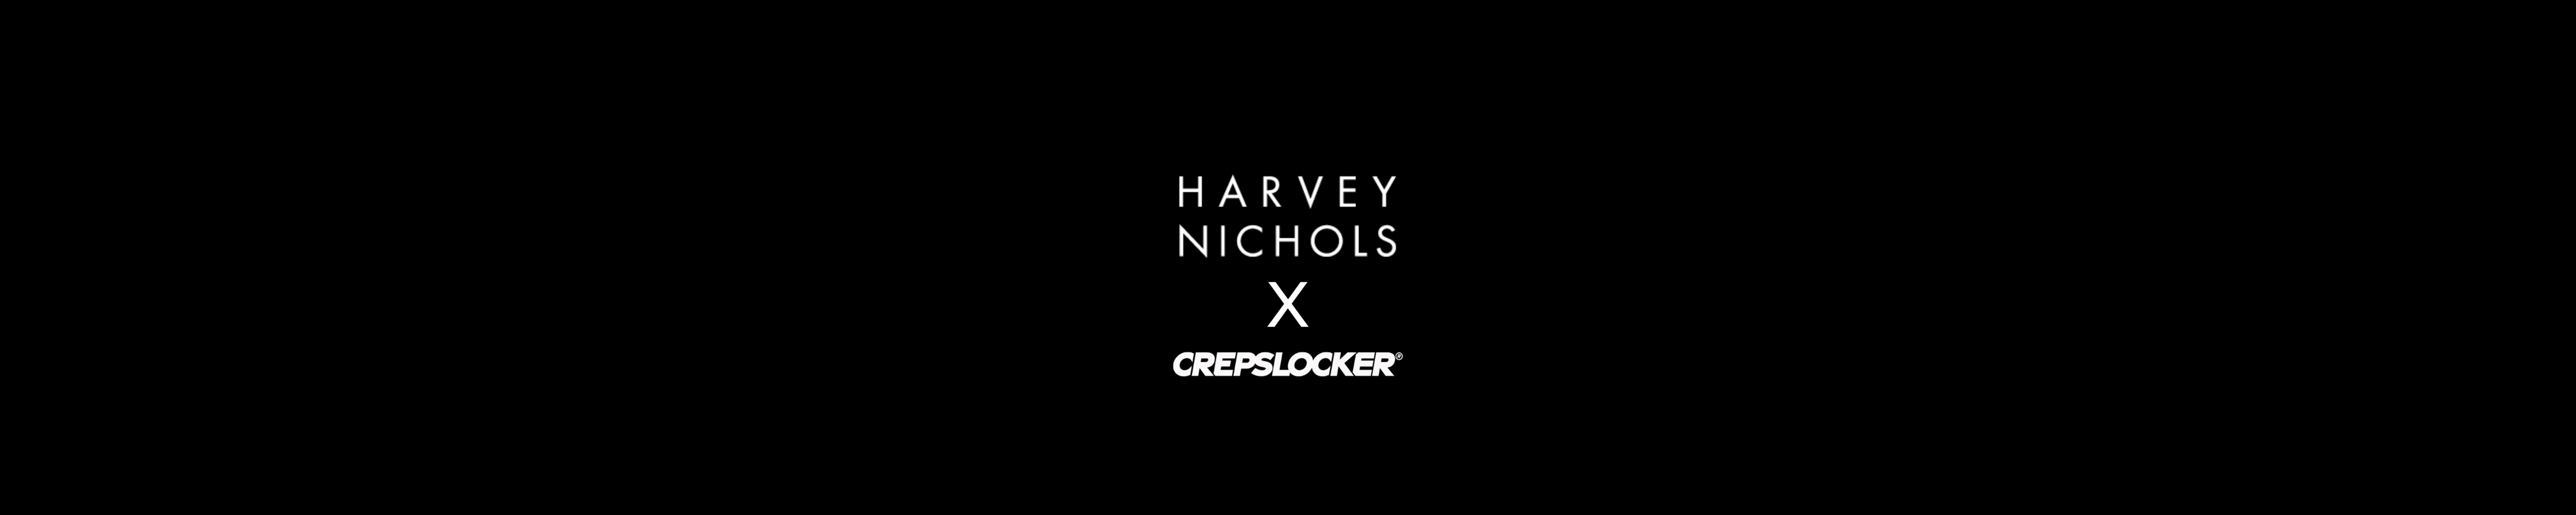 Crepslocker Takes Over Harvey Nichols Manchester